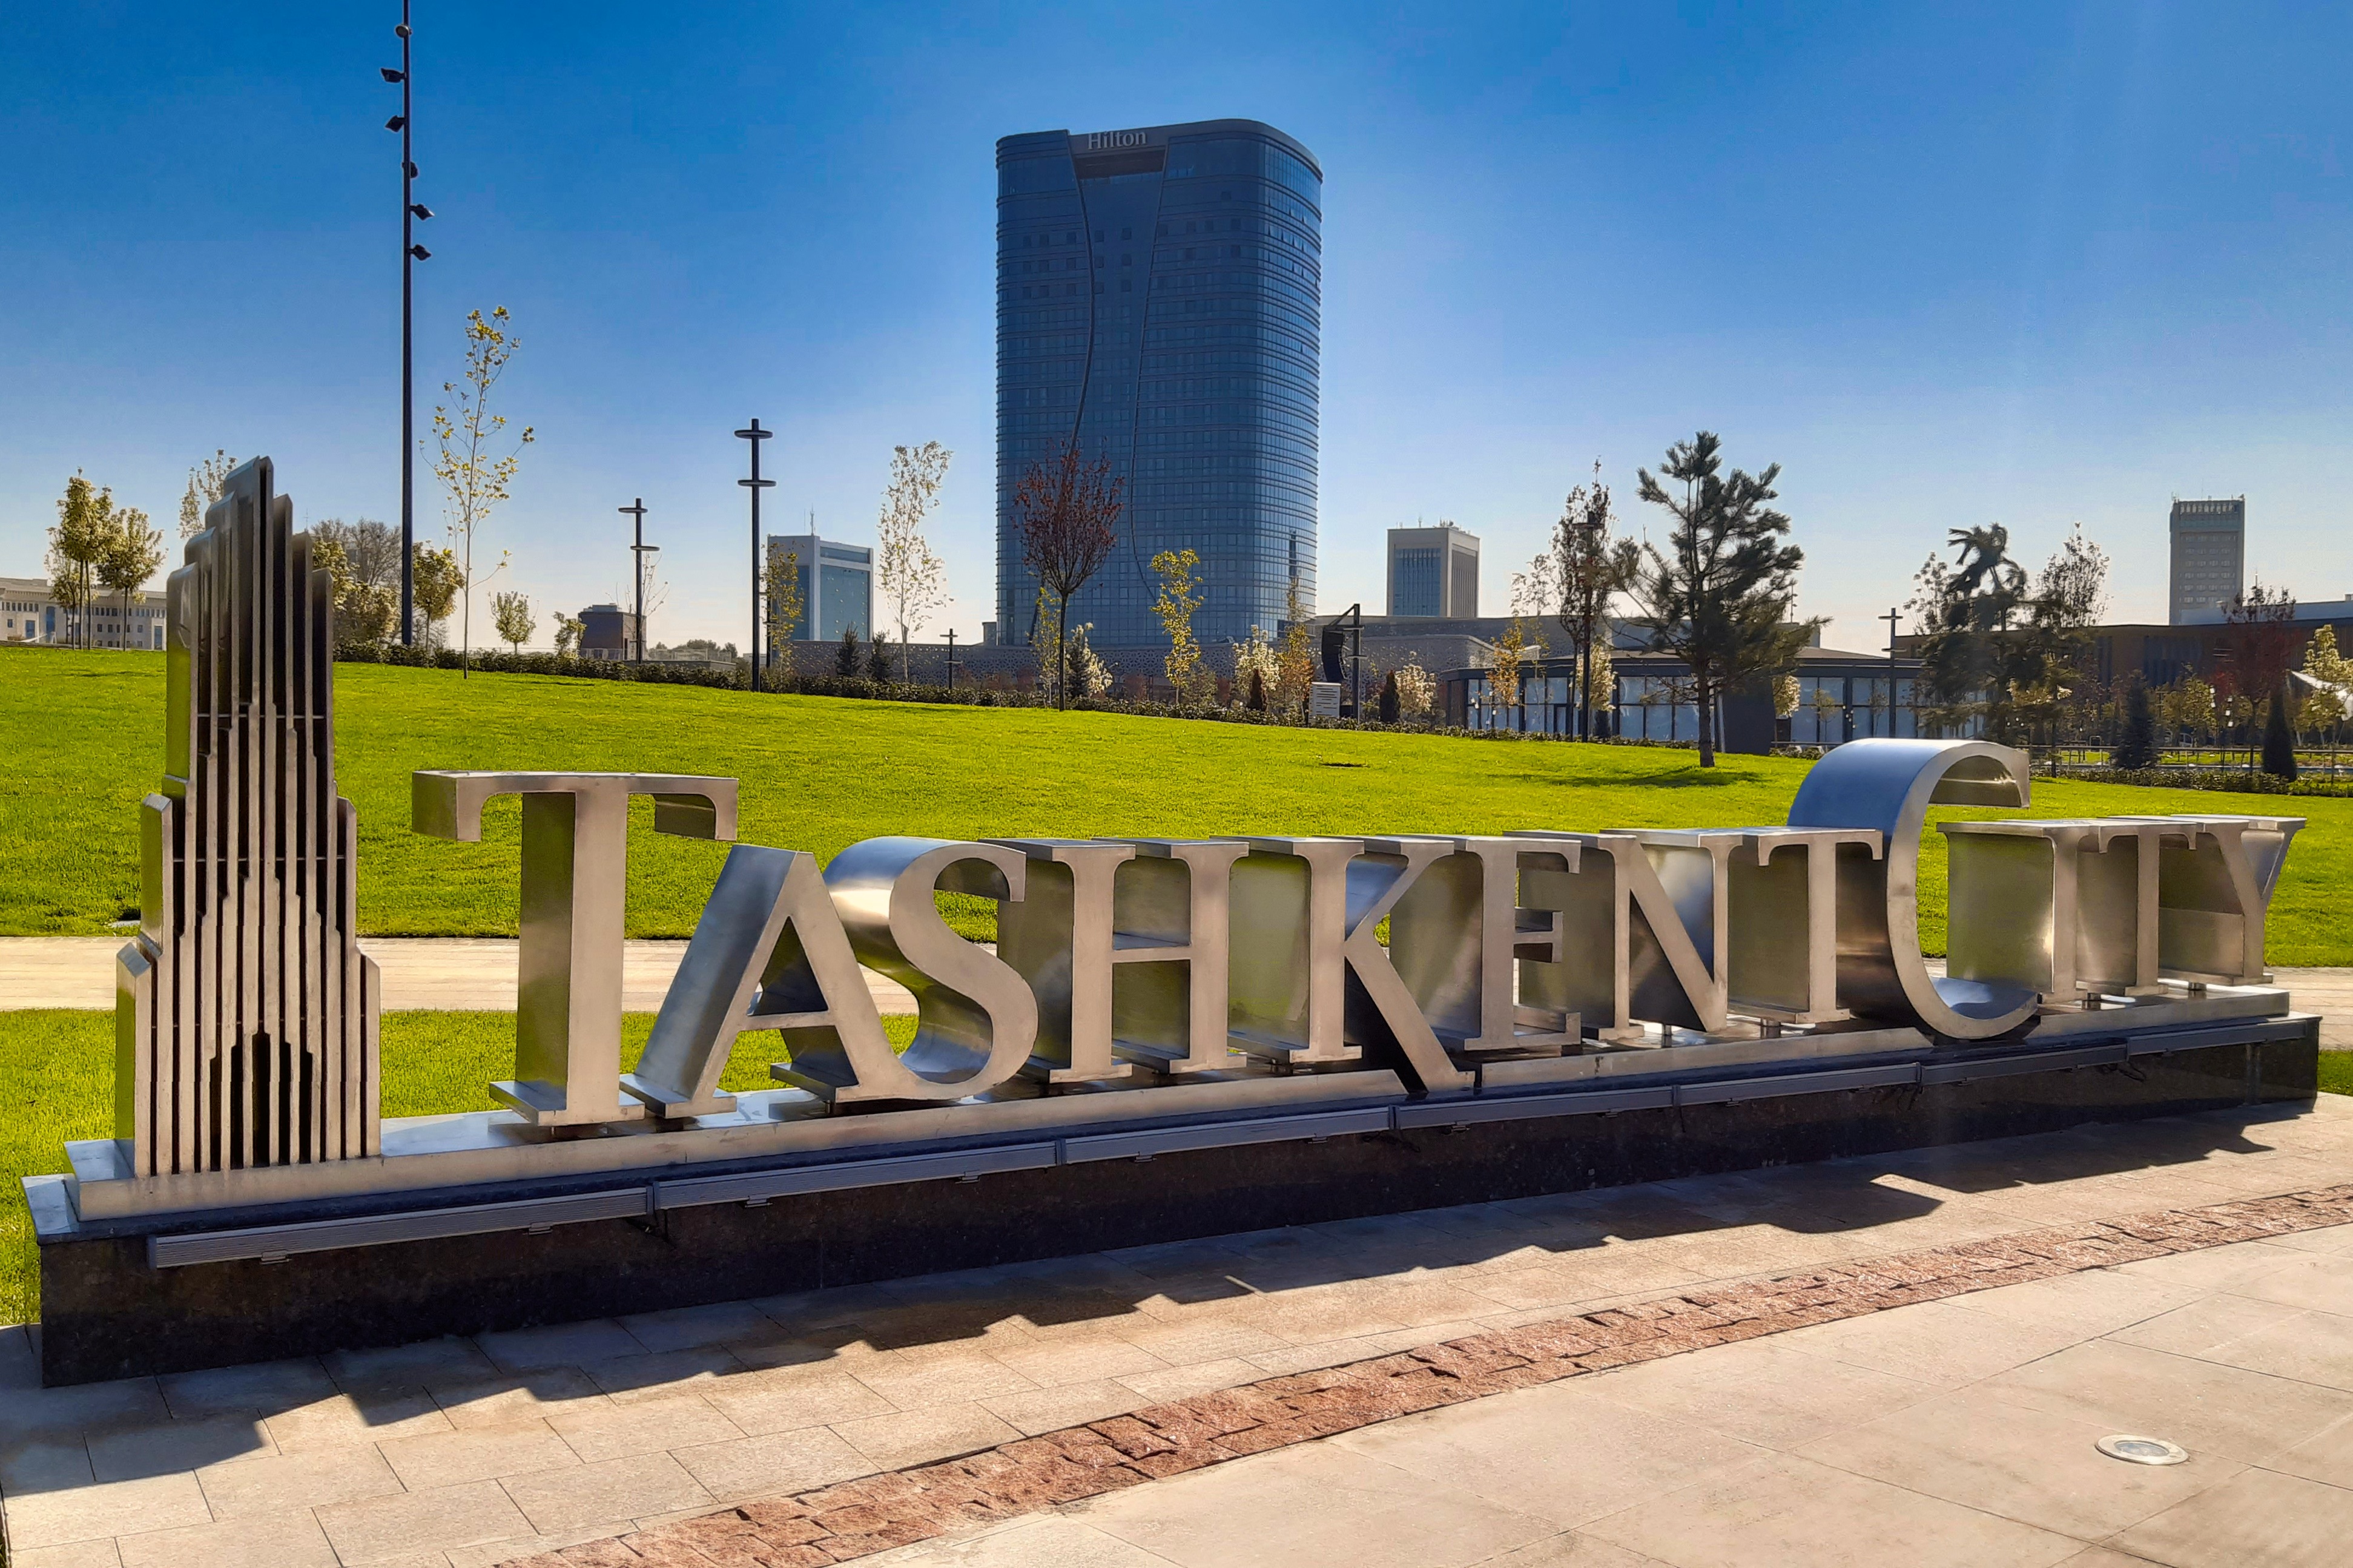 Tashkent-City_name_statue.jpg